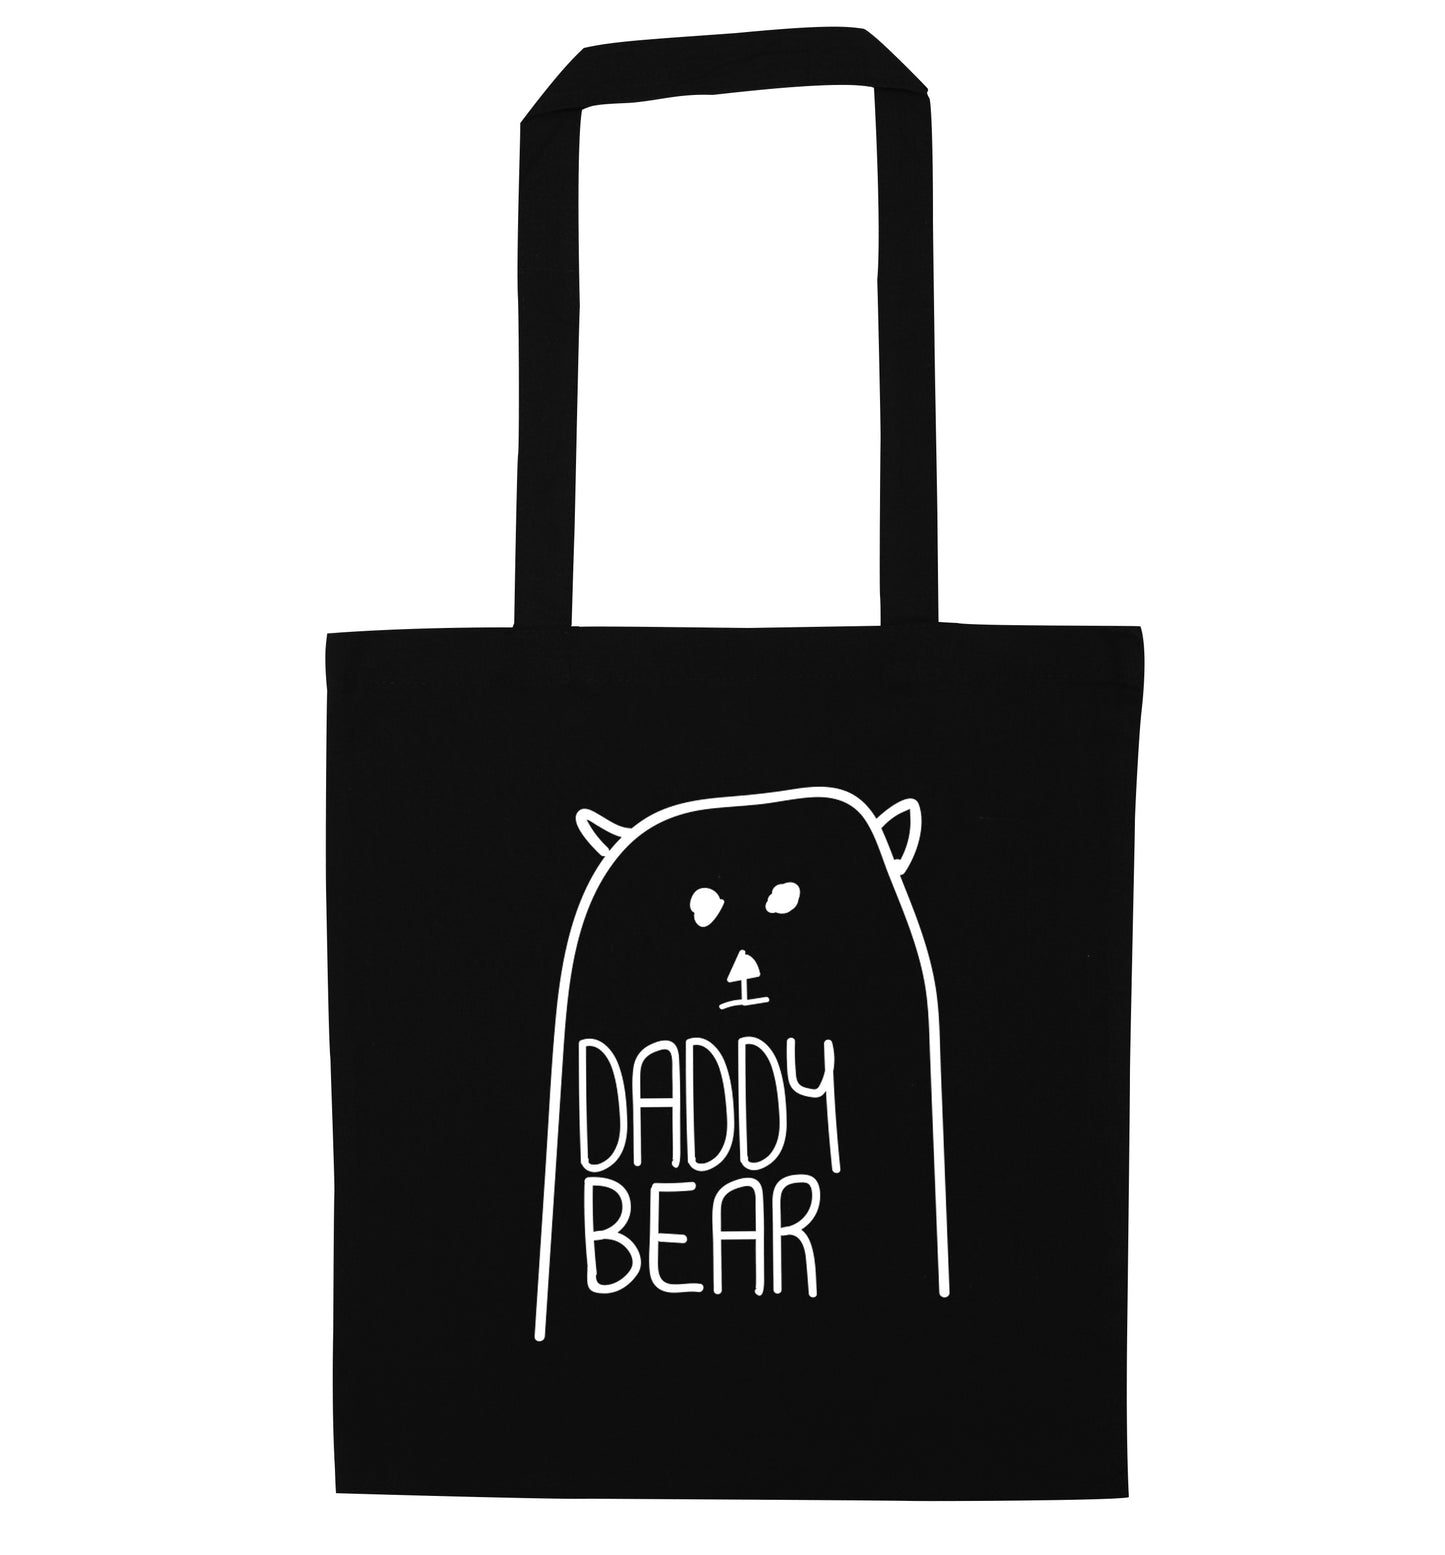 Daddy bear black tote bag